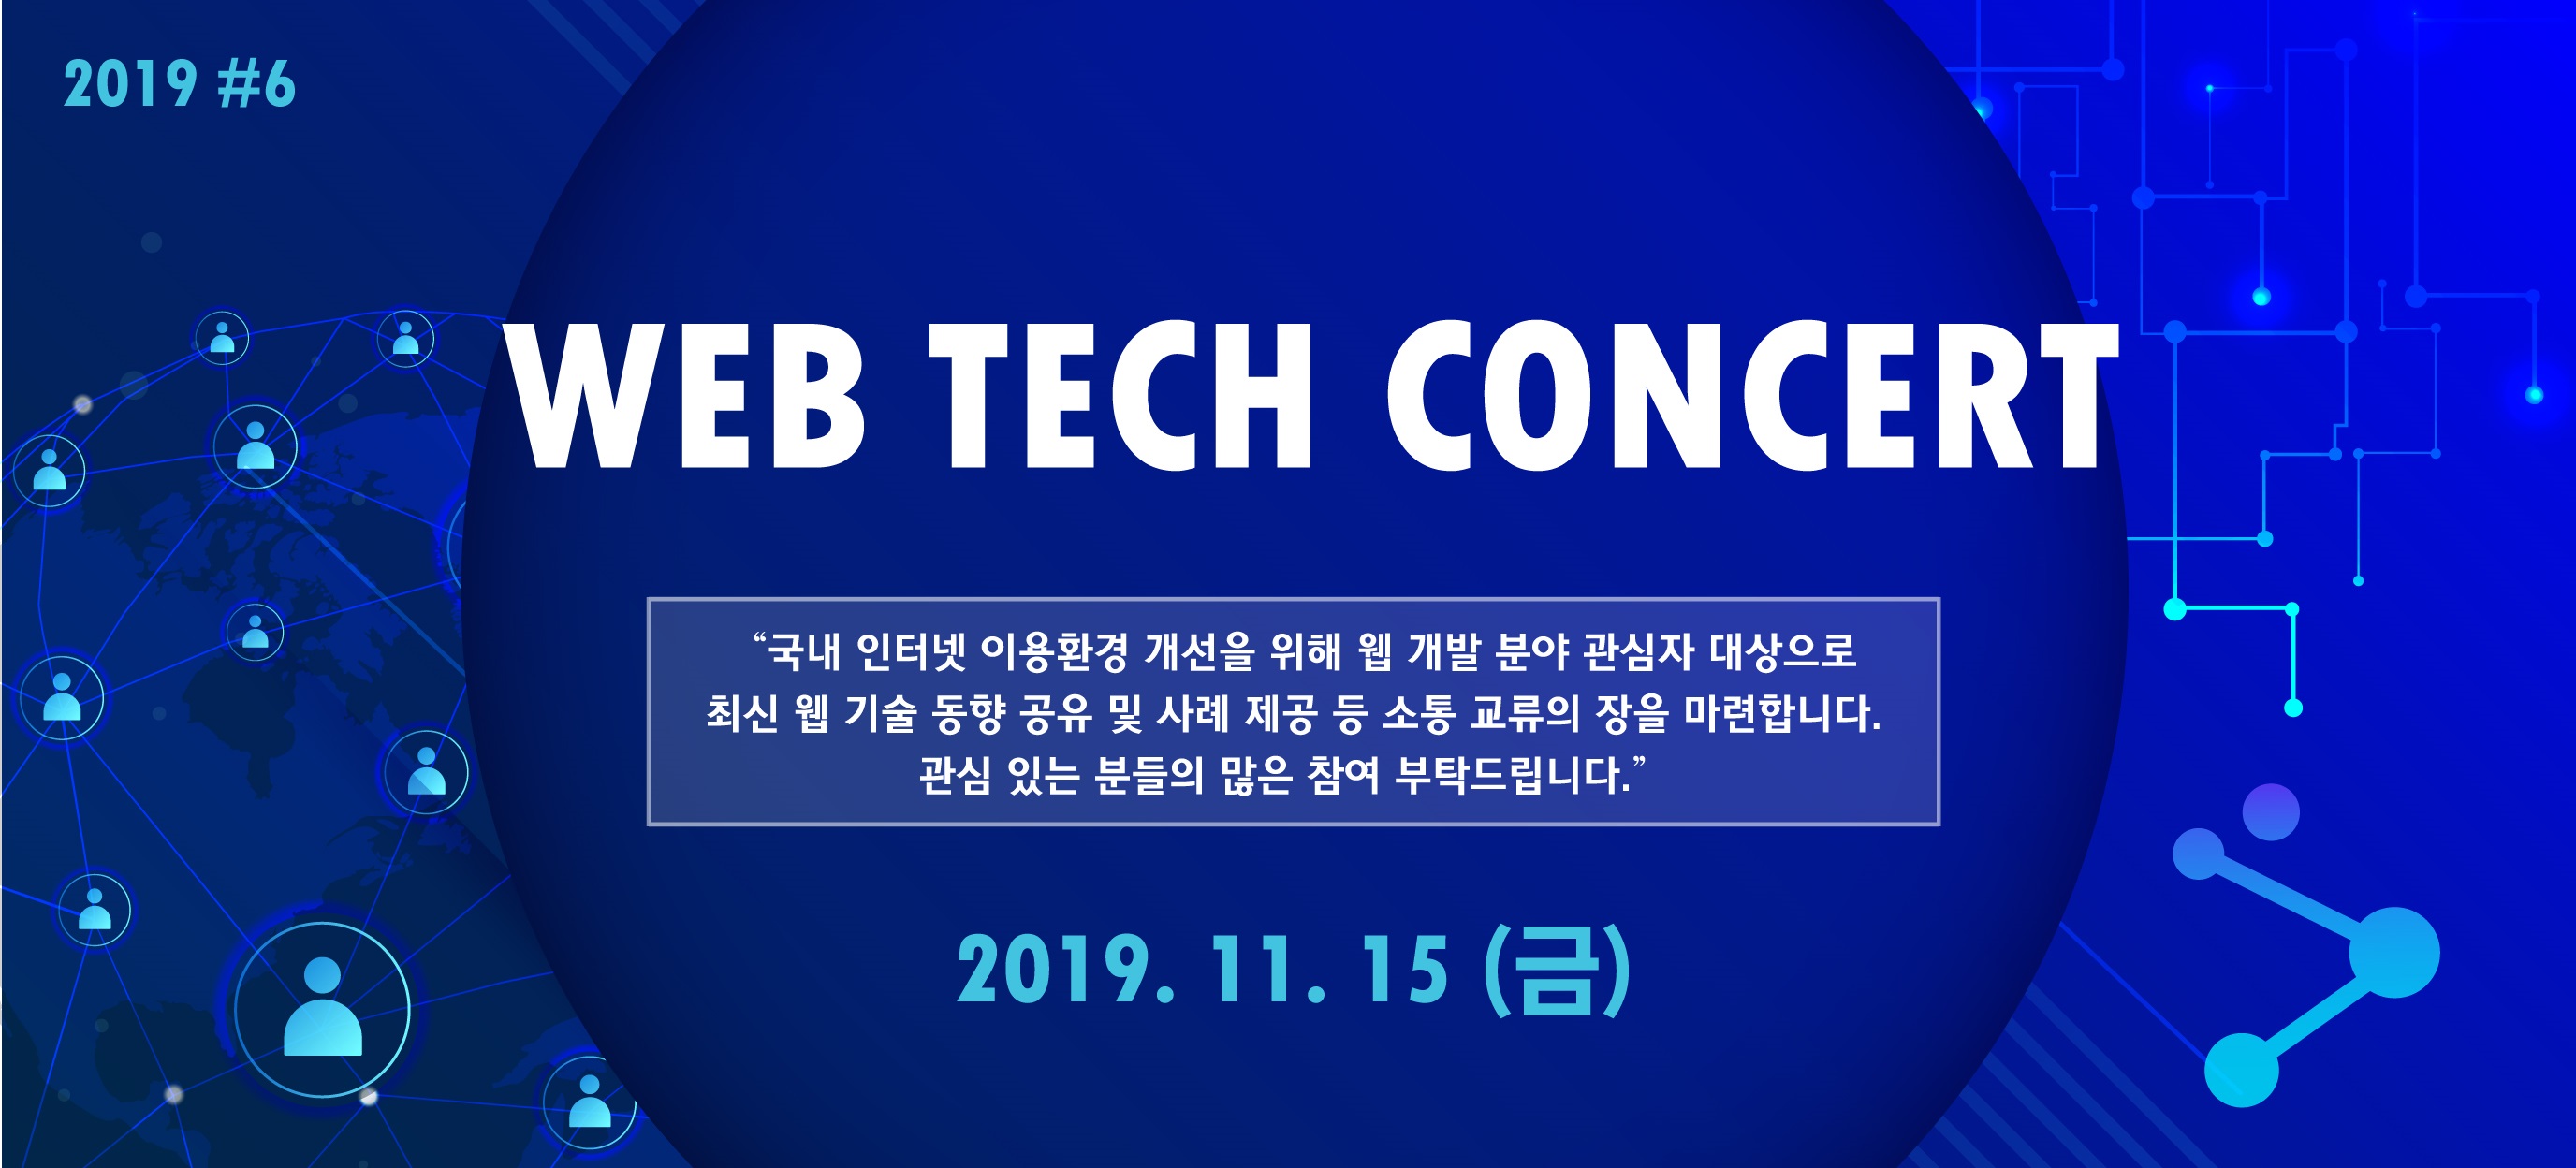 2019 #6 Web Tech Concert